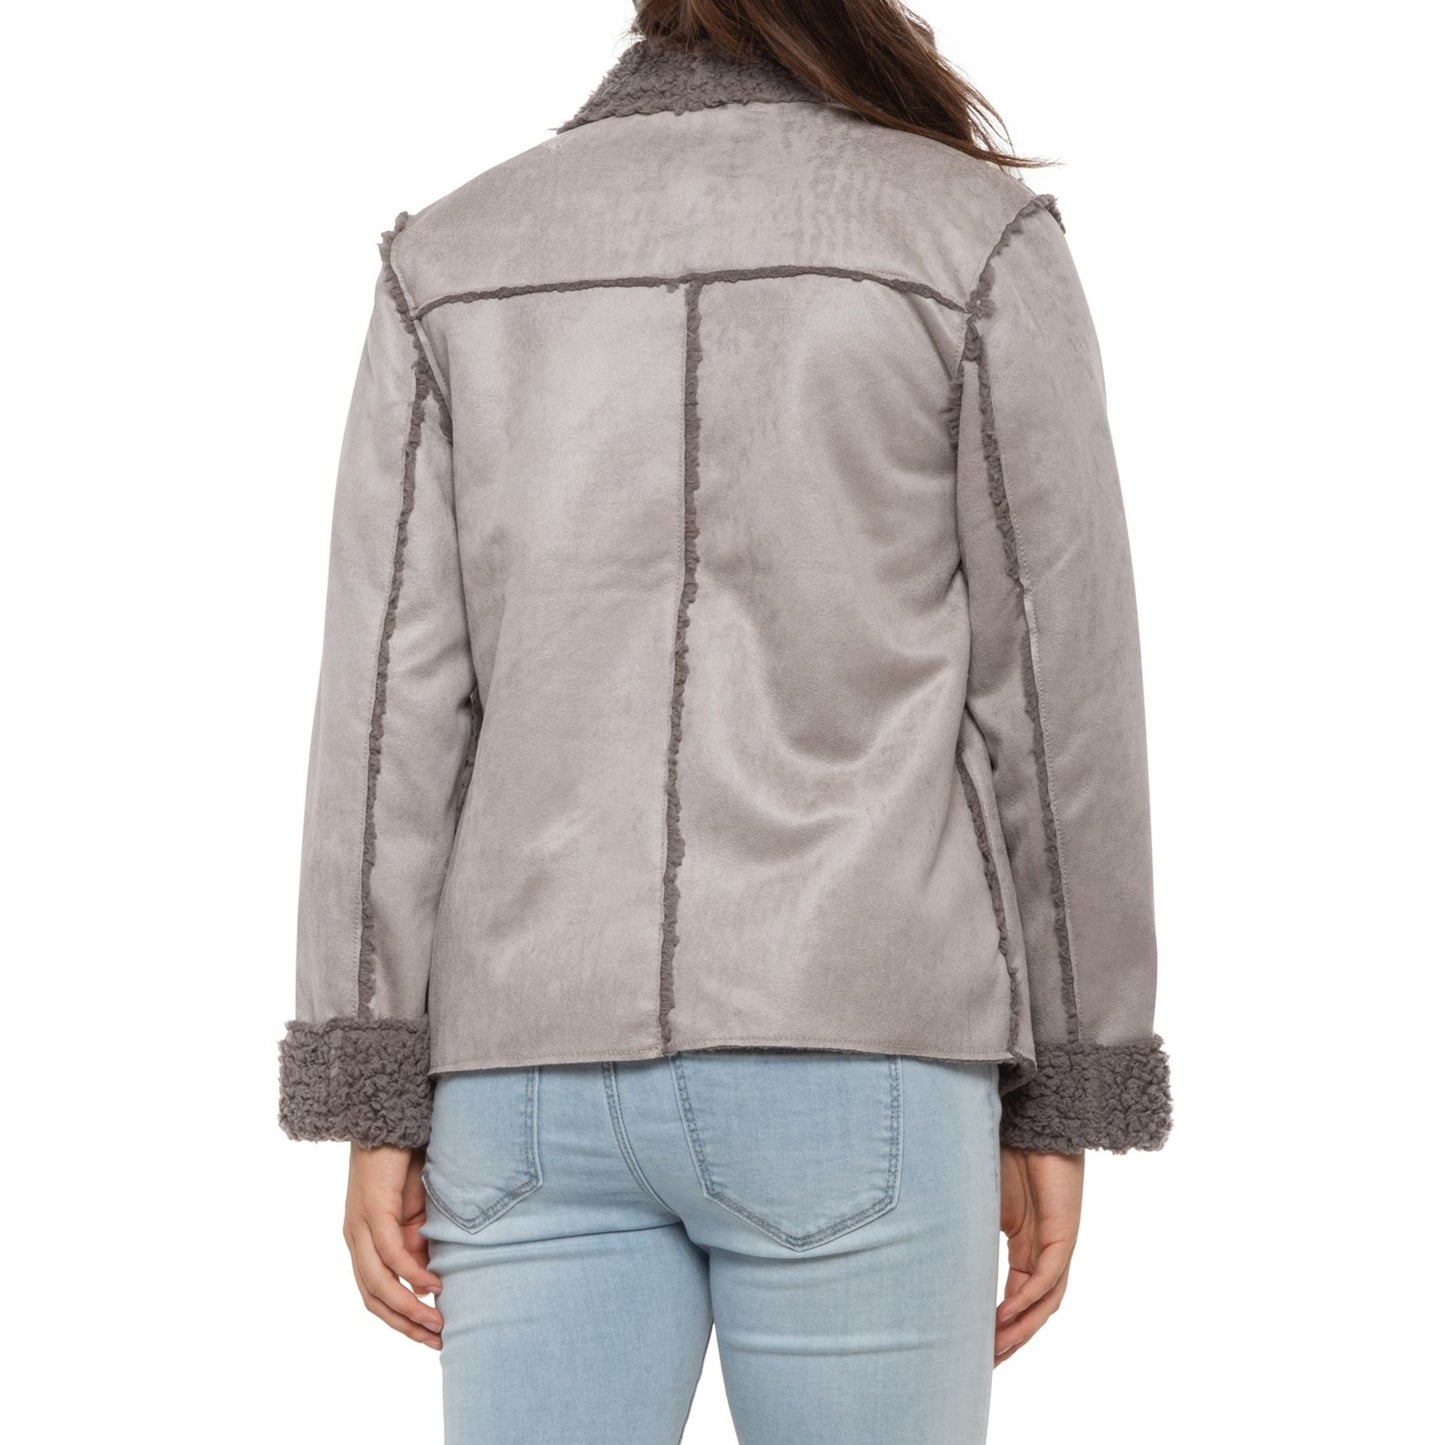 Dylan Women's Reversible Soft Faux Fur Suede Coat Jacket